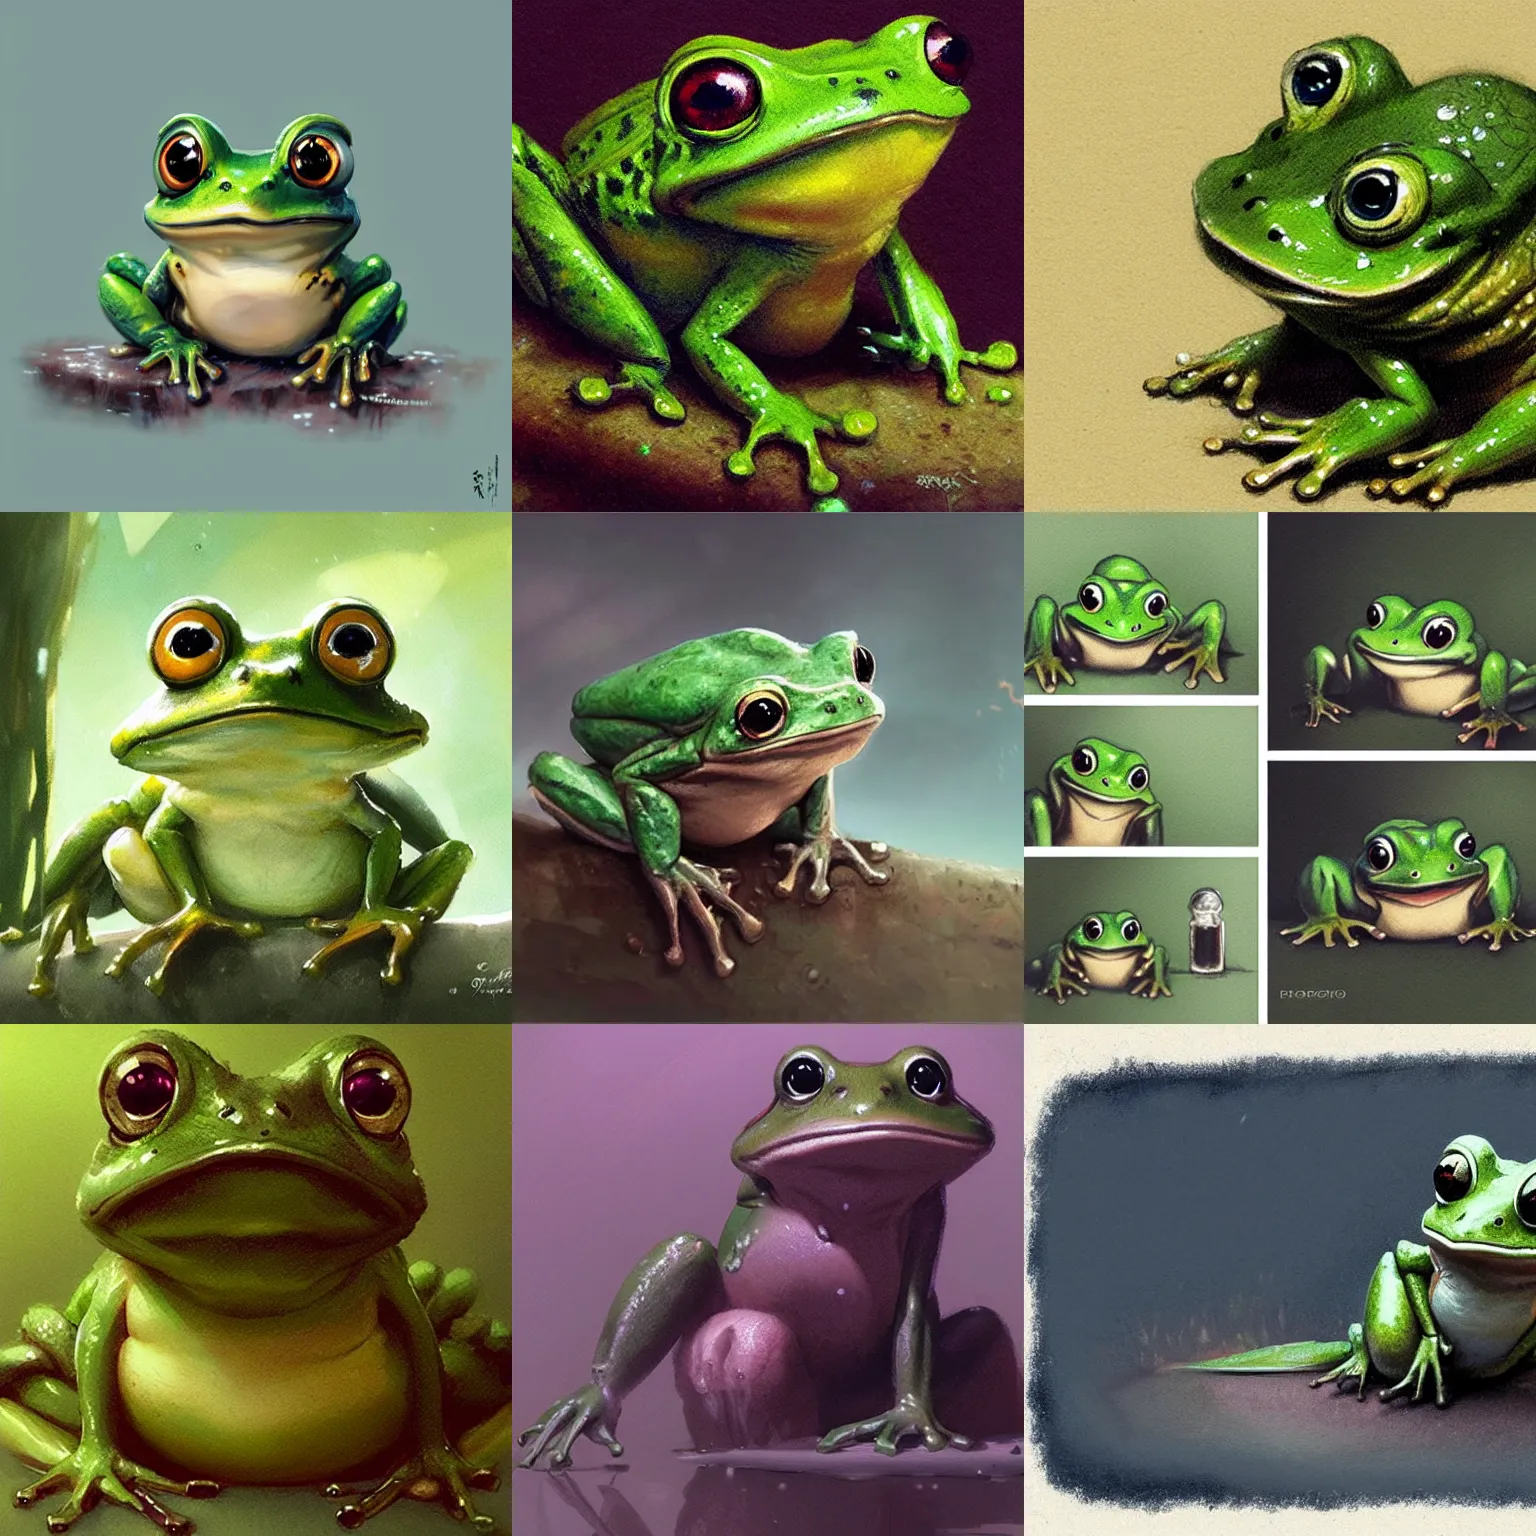 Prompt: cute anime antropomorphic chibi frog illustration by greg rutkowski